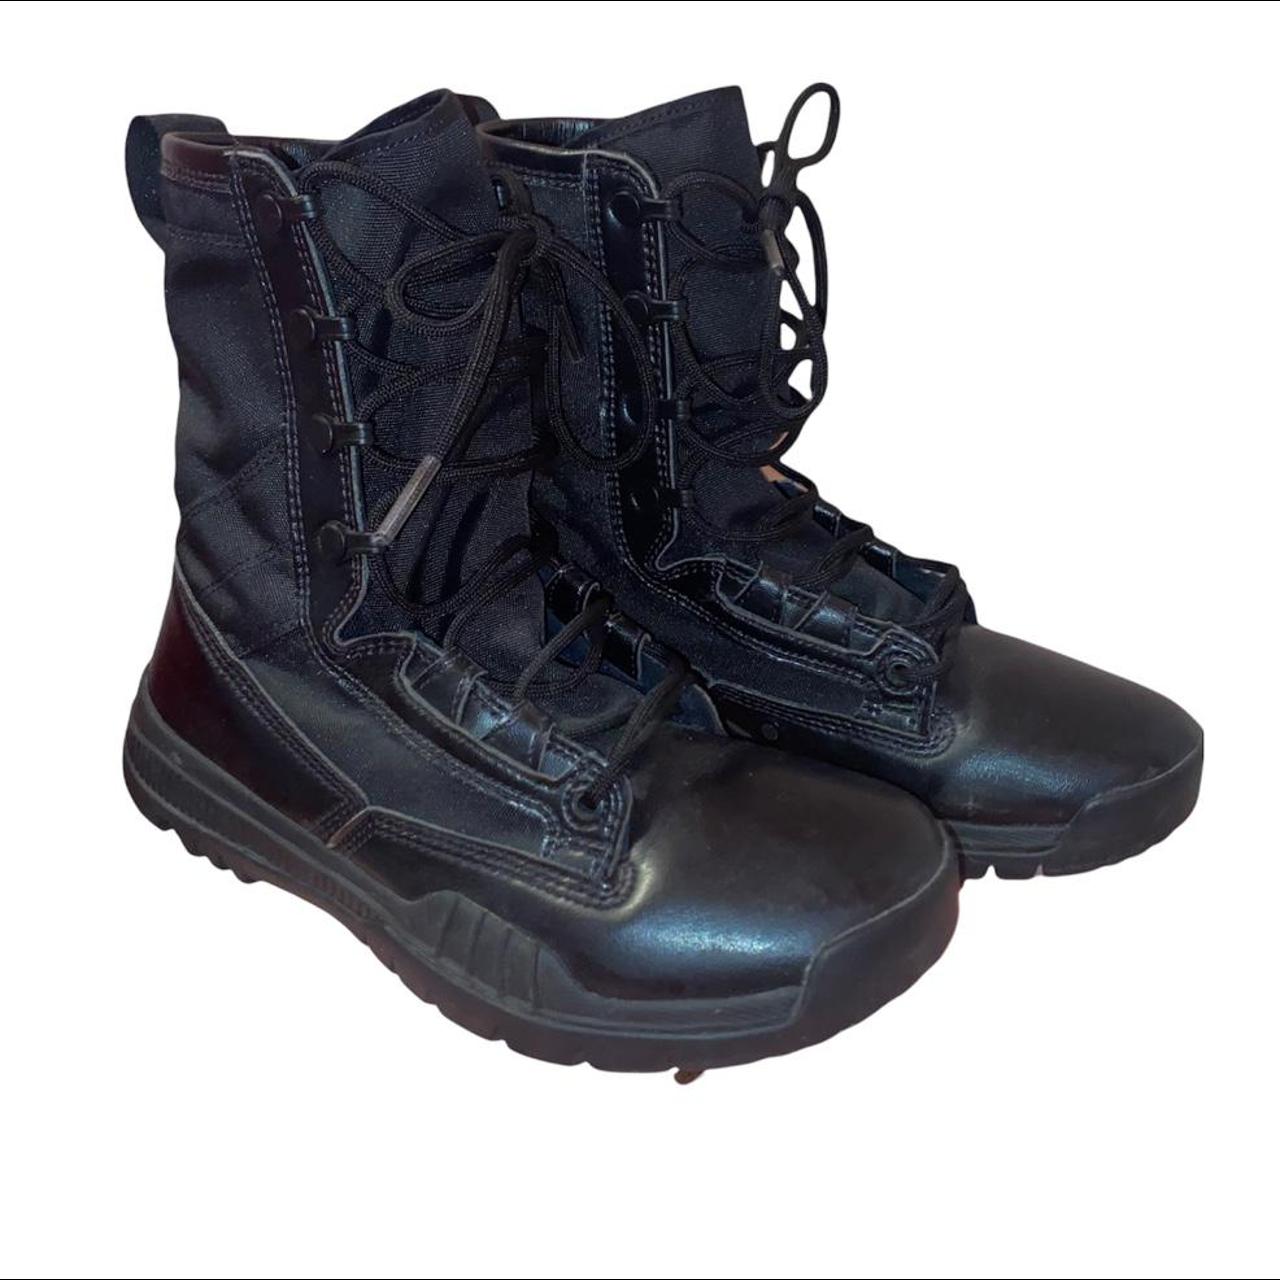 Product Image 1 - Nike boots! I forgot the